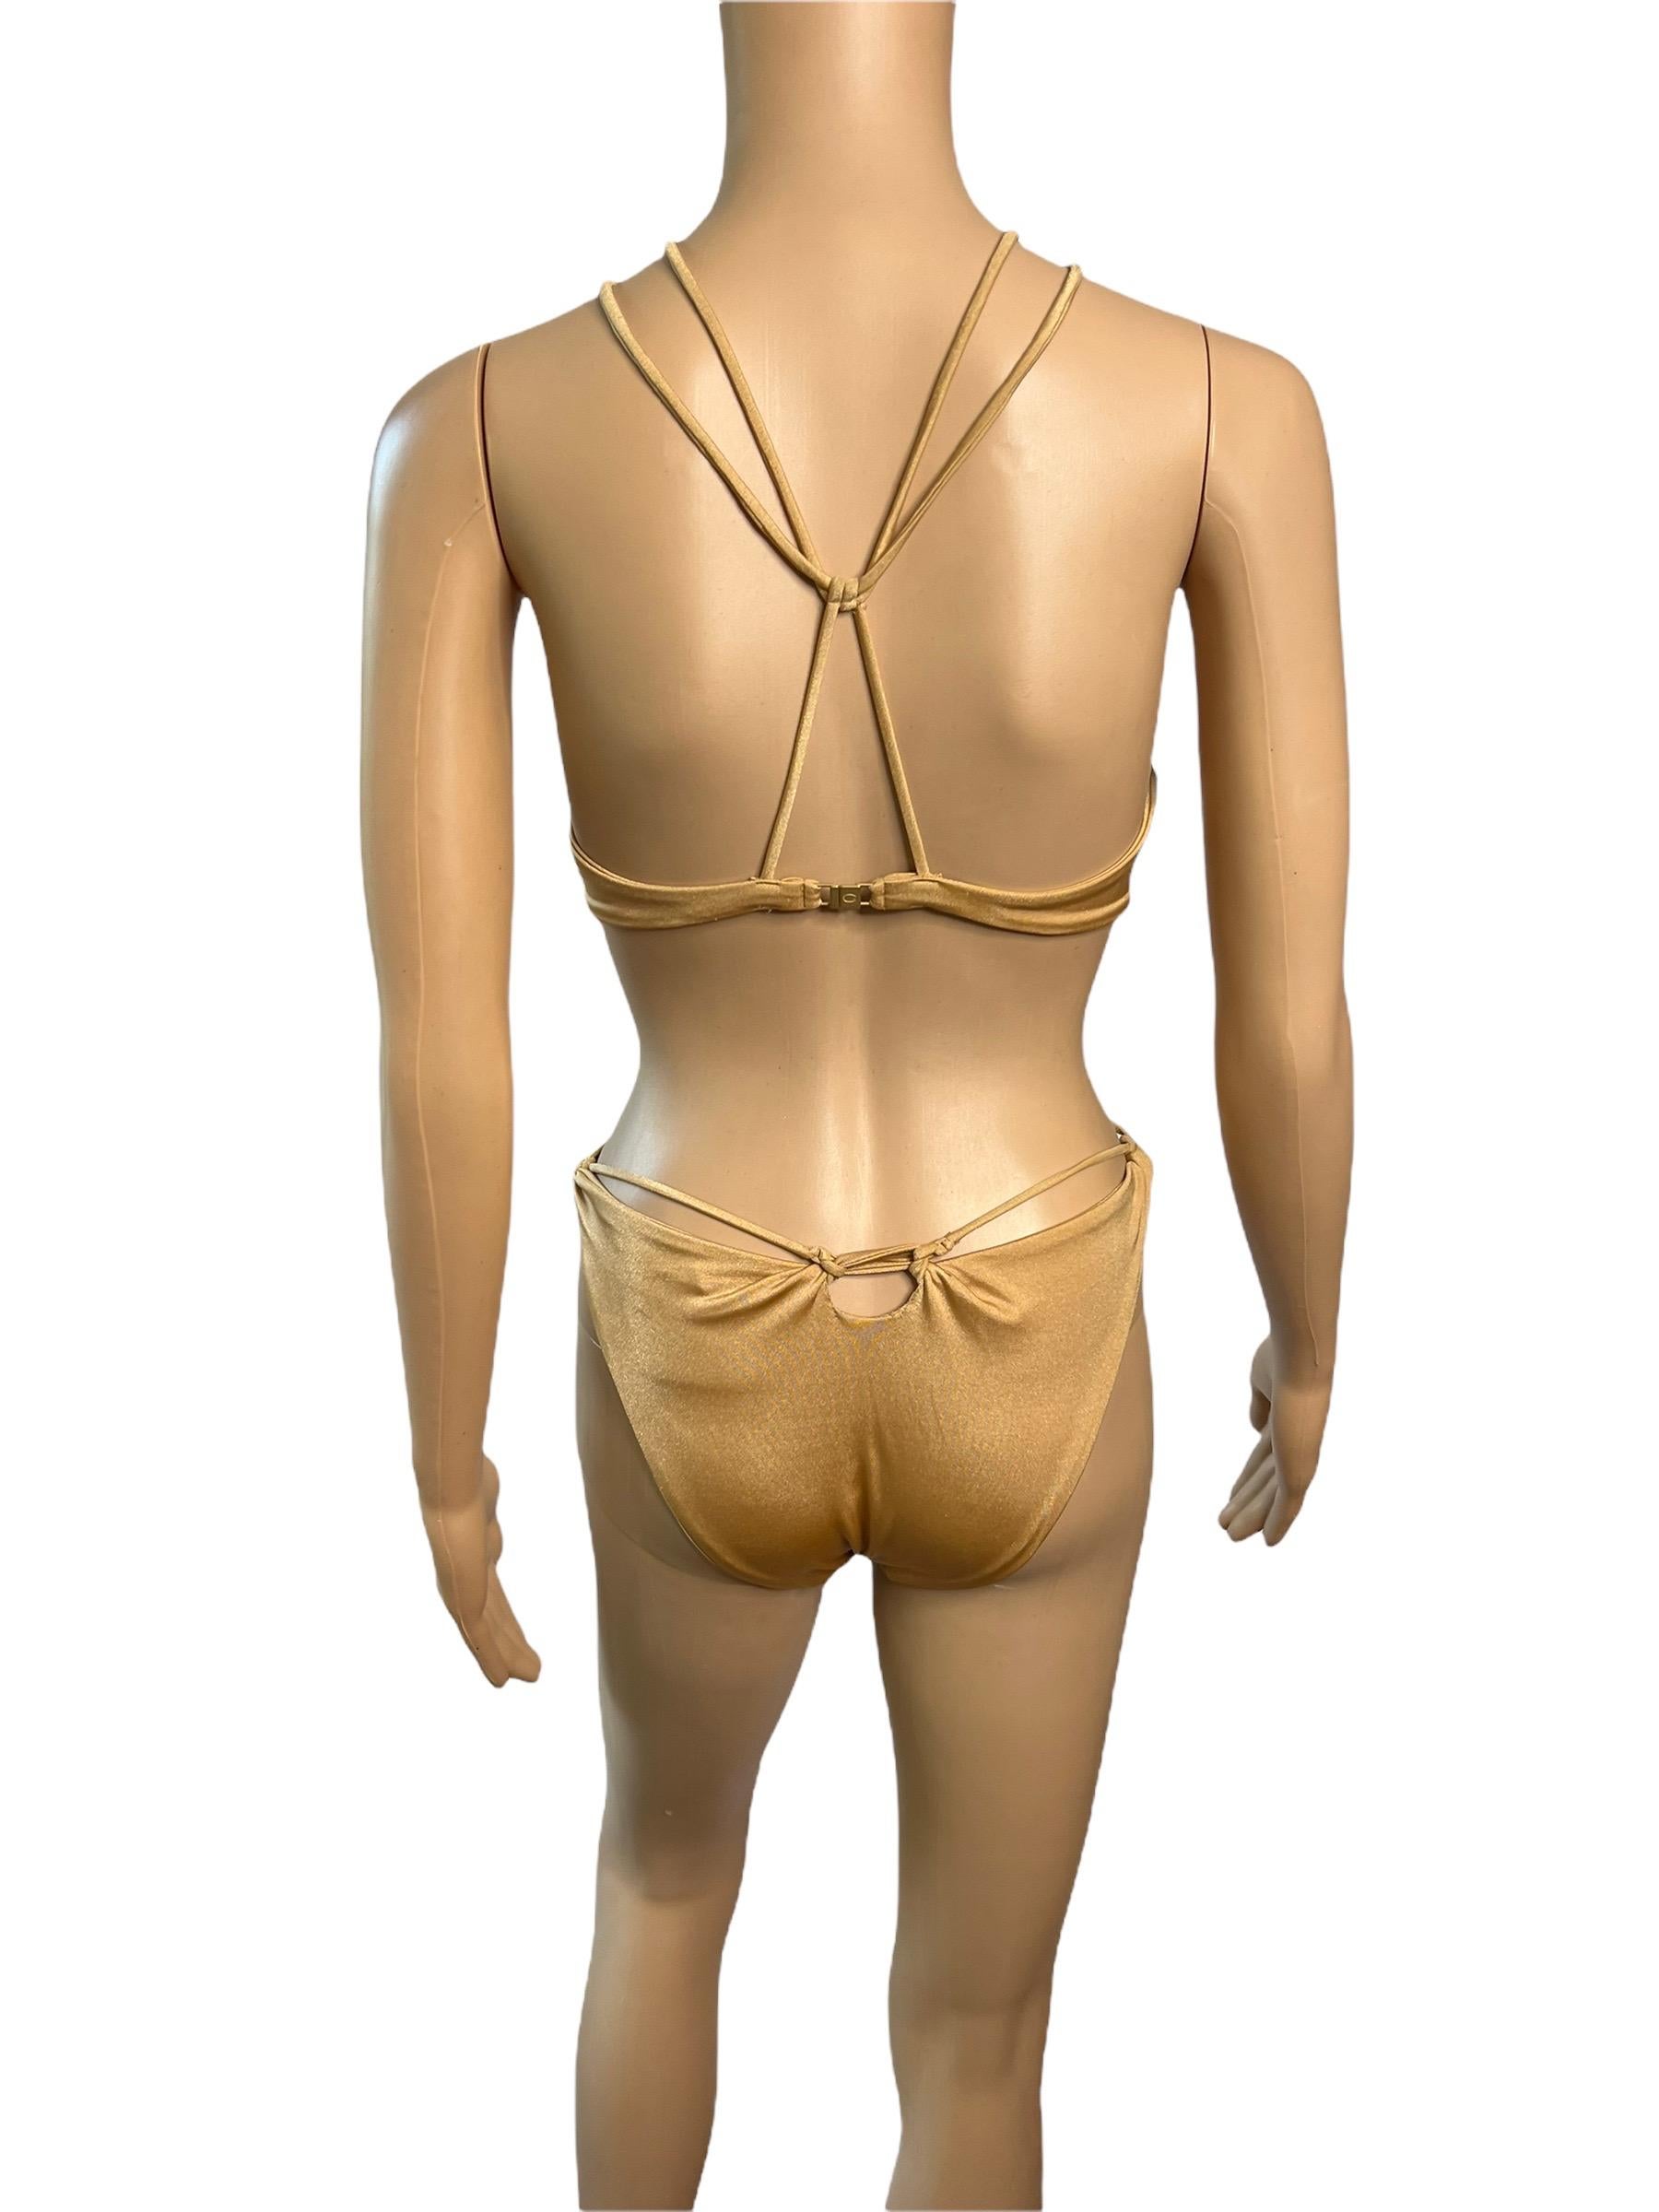 Tom Ford for Gucci c.2004 Bondage Strappy Gold 2 Piece Bikini Swimsuit Swimwear Size M
